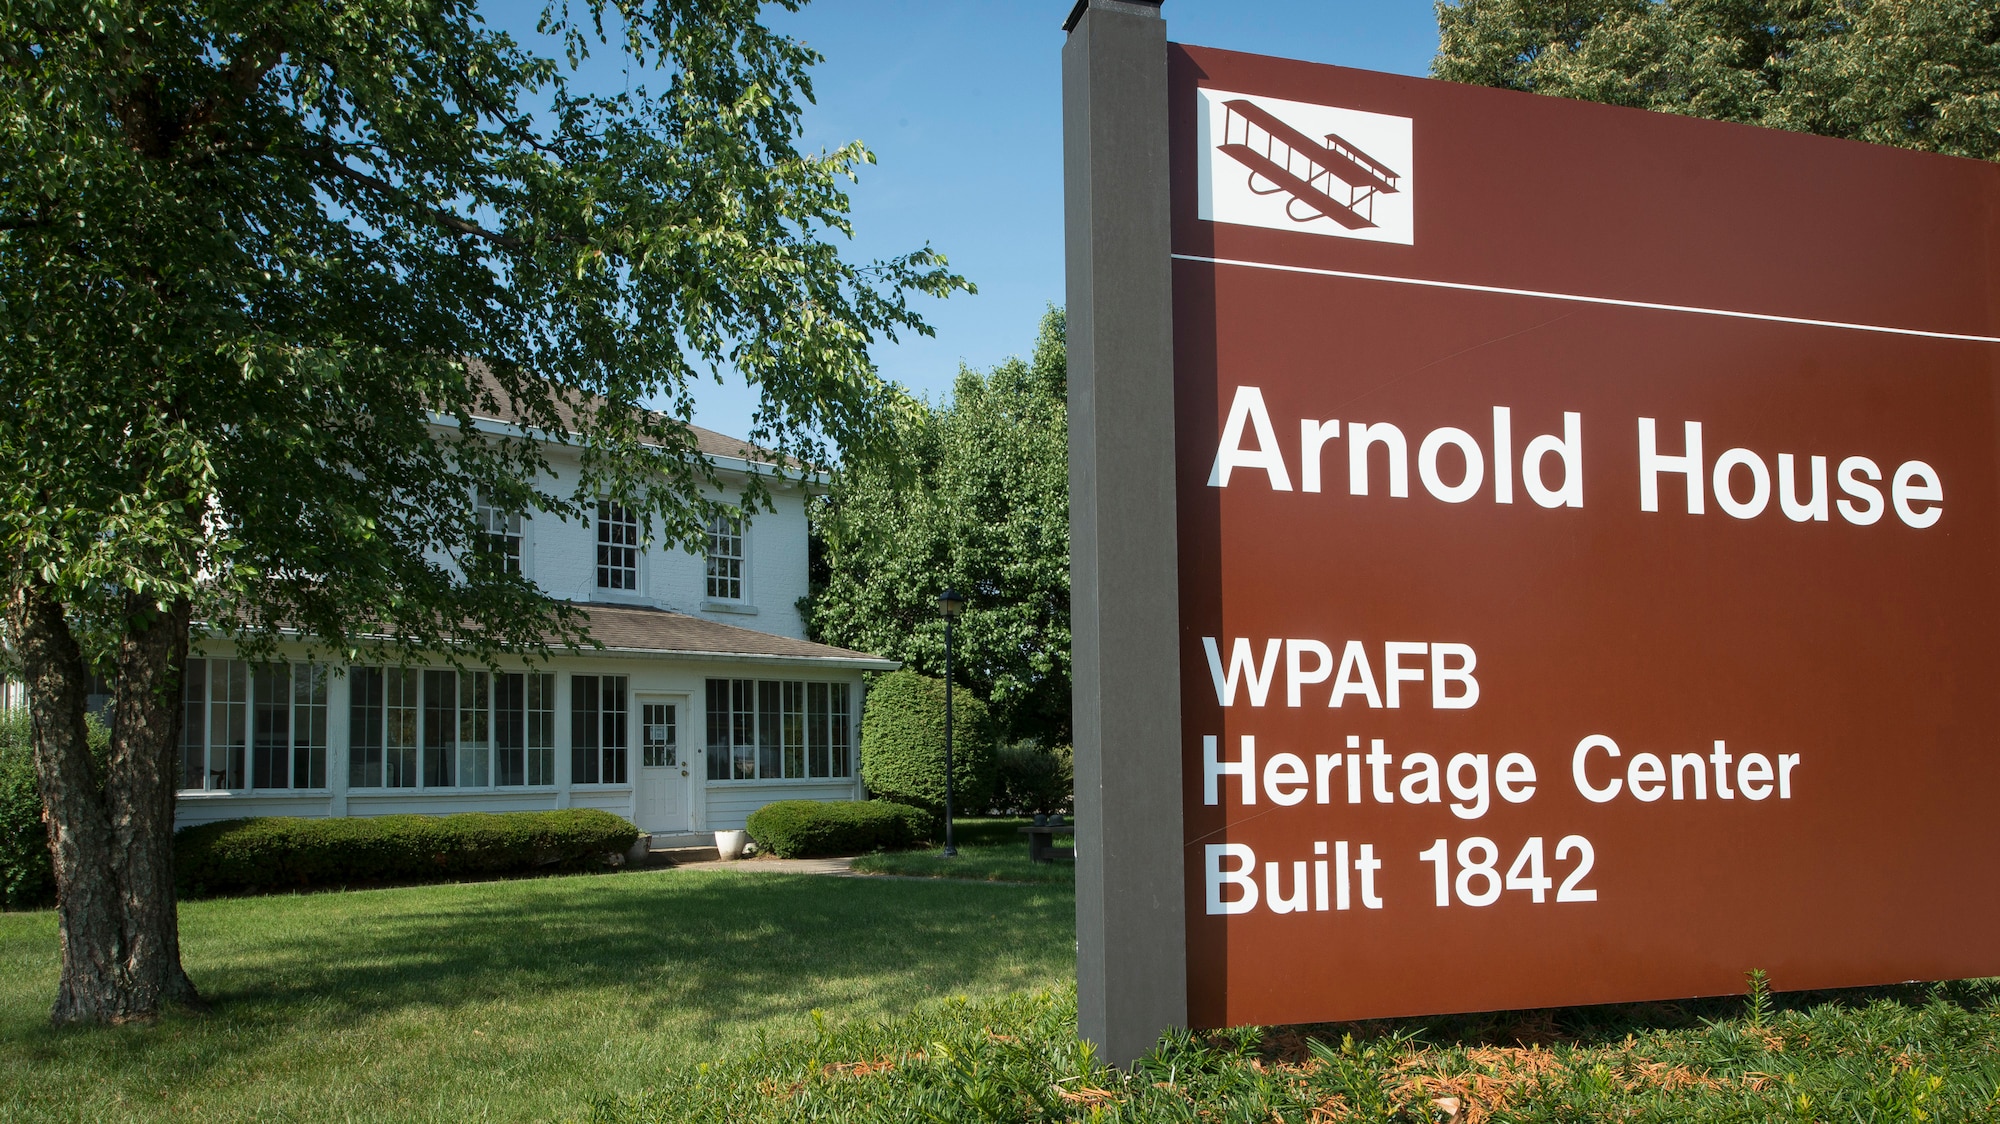 Arnold house is a historic Wright-Patt landmark